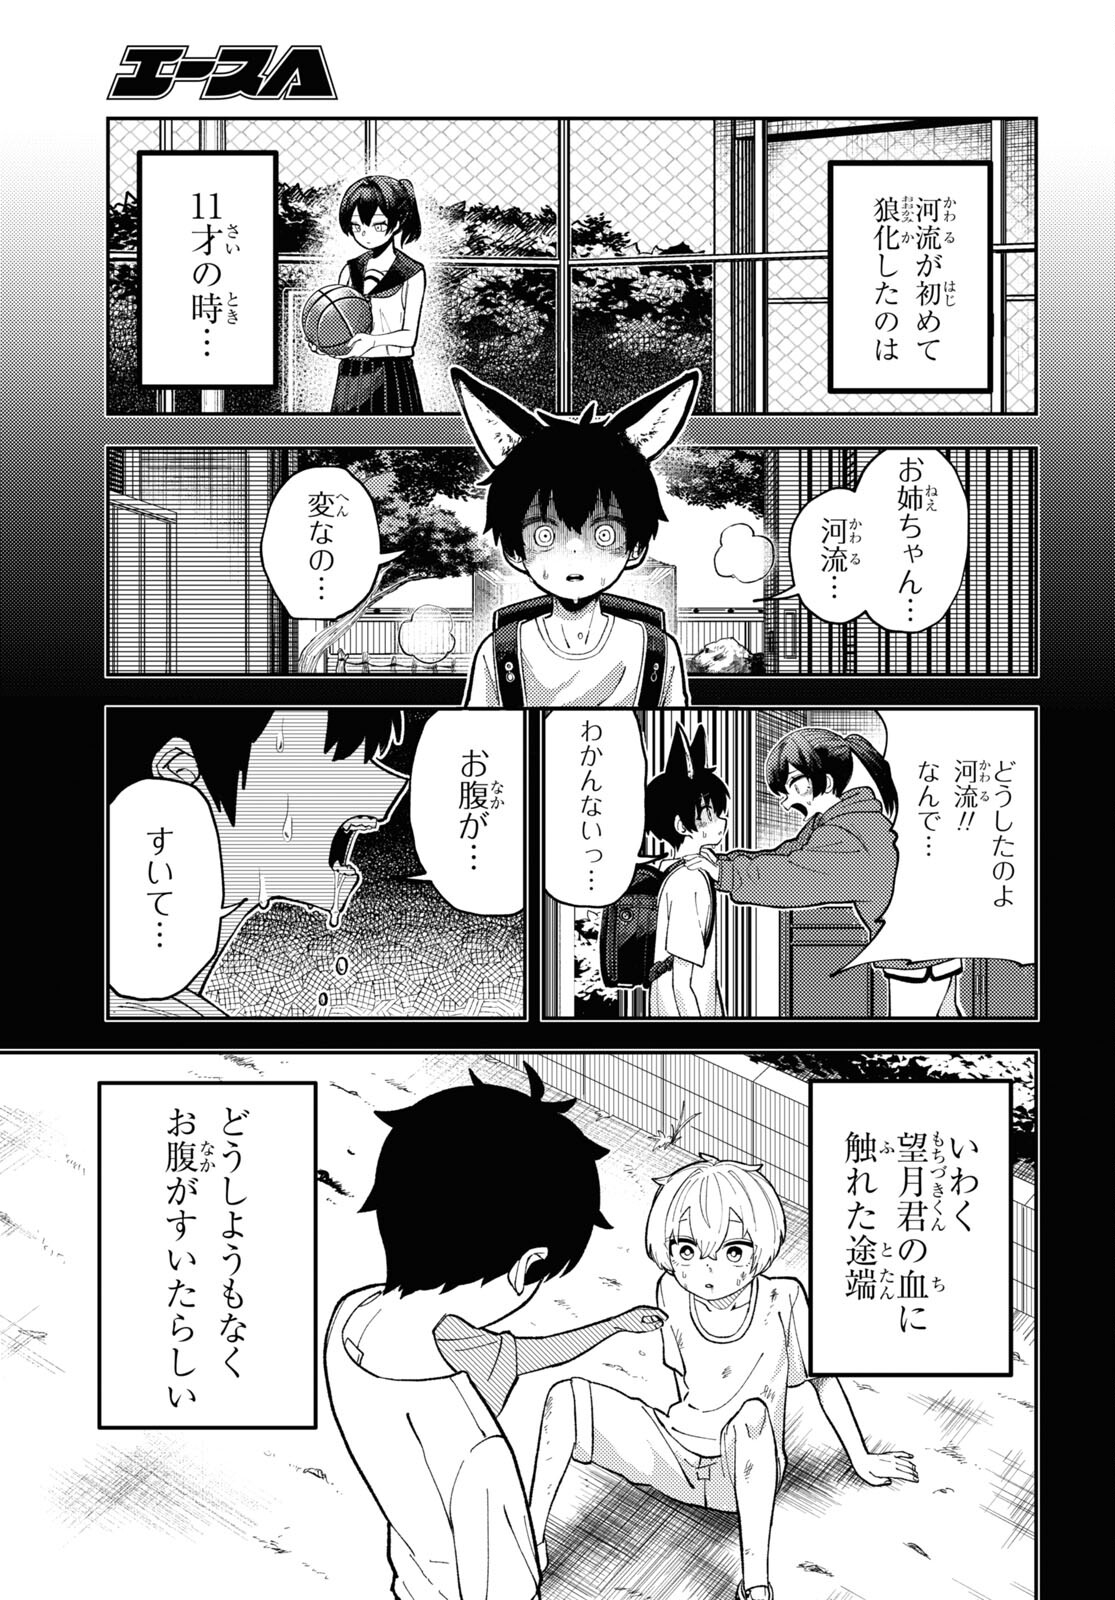 Garuru Girl - Chapter 3 - Page 19